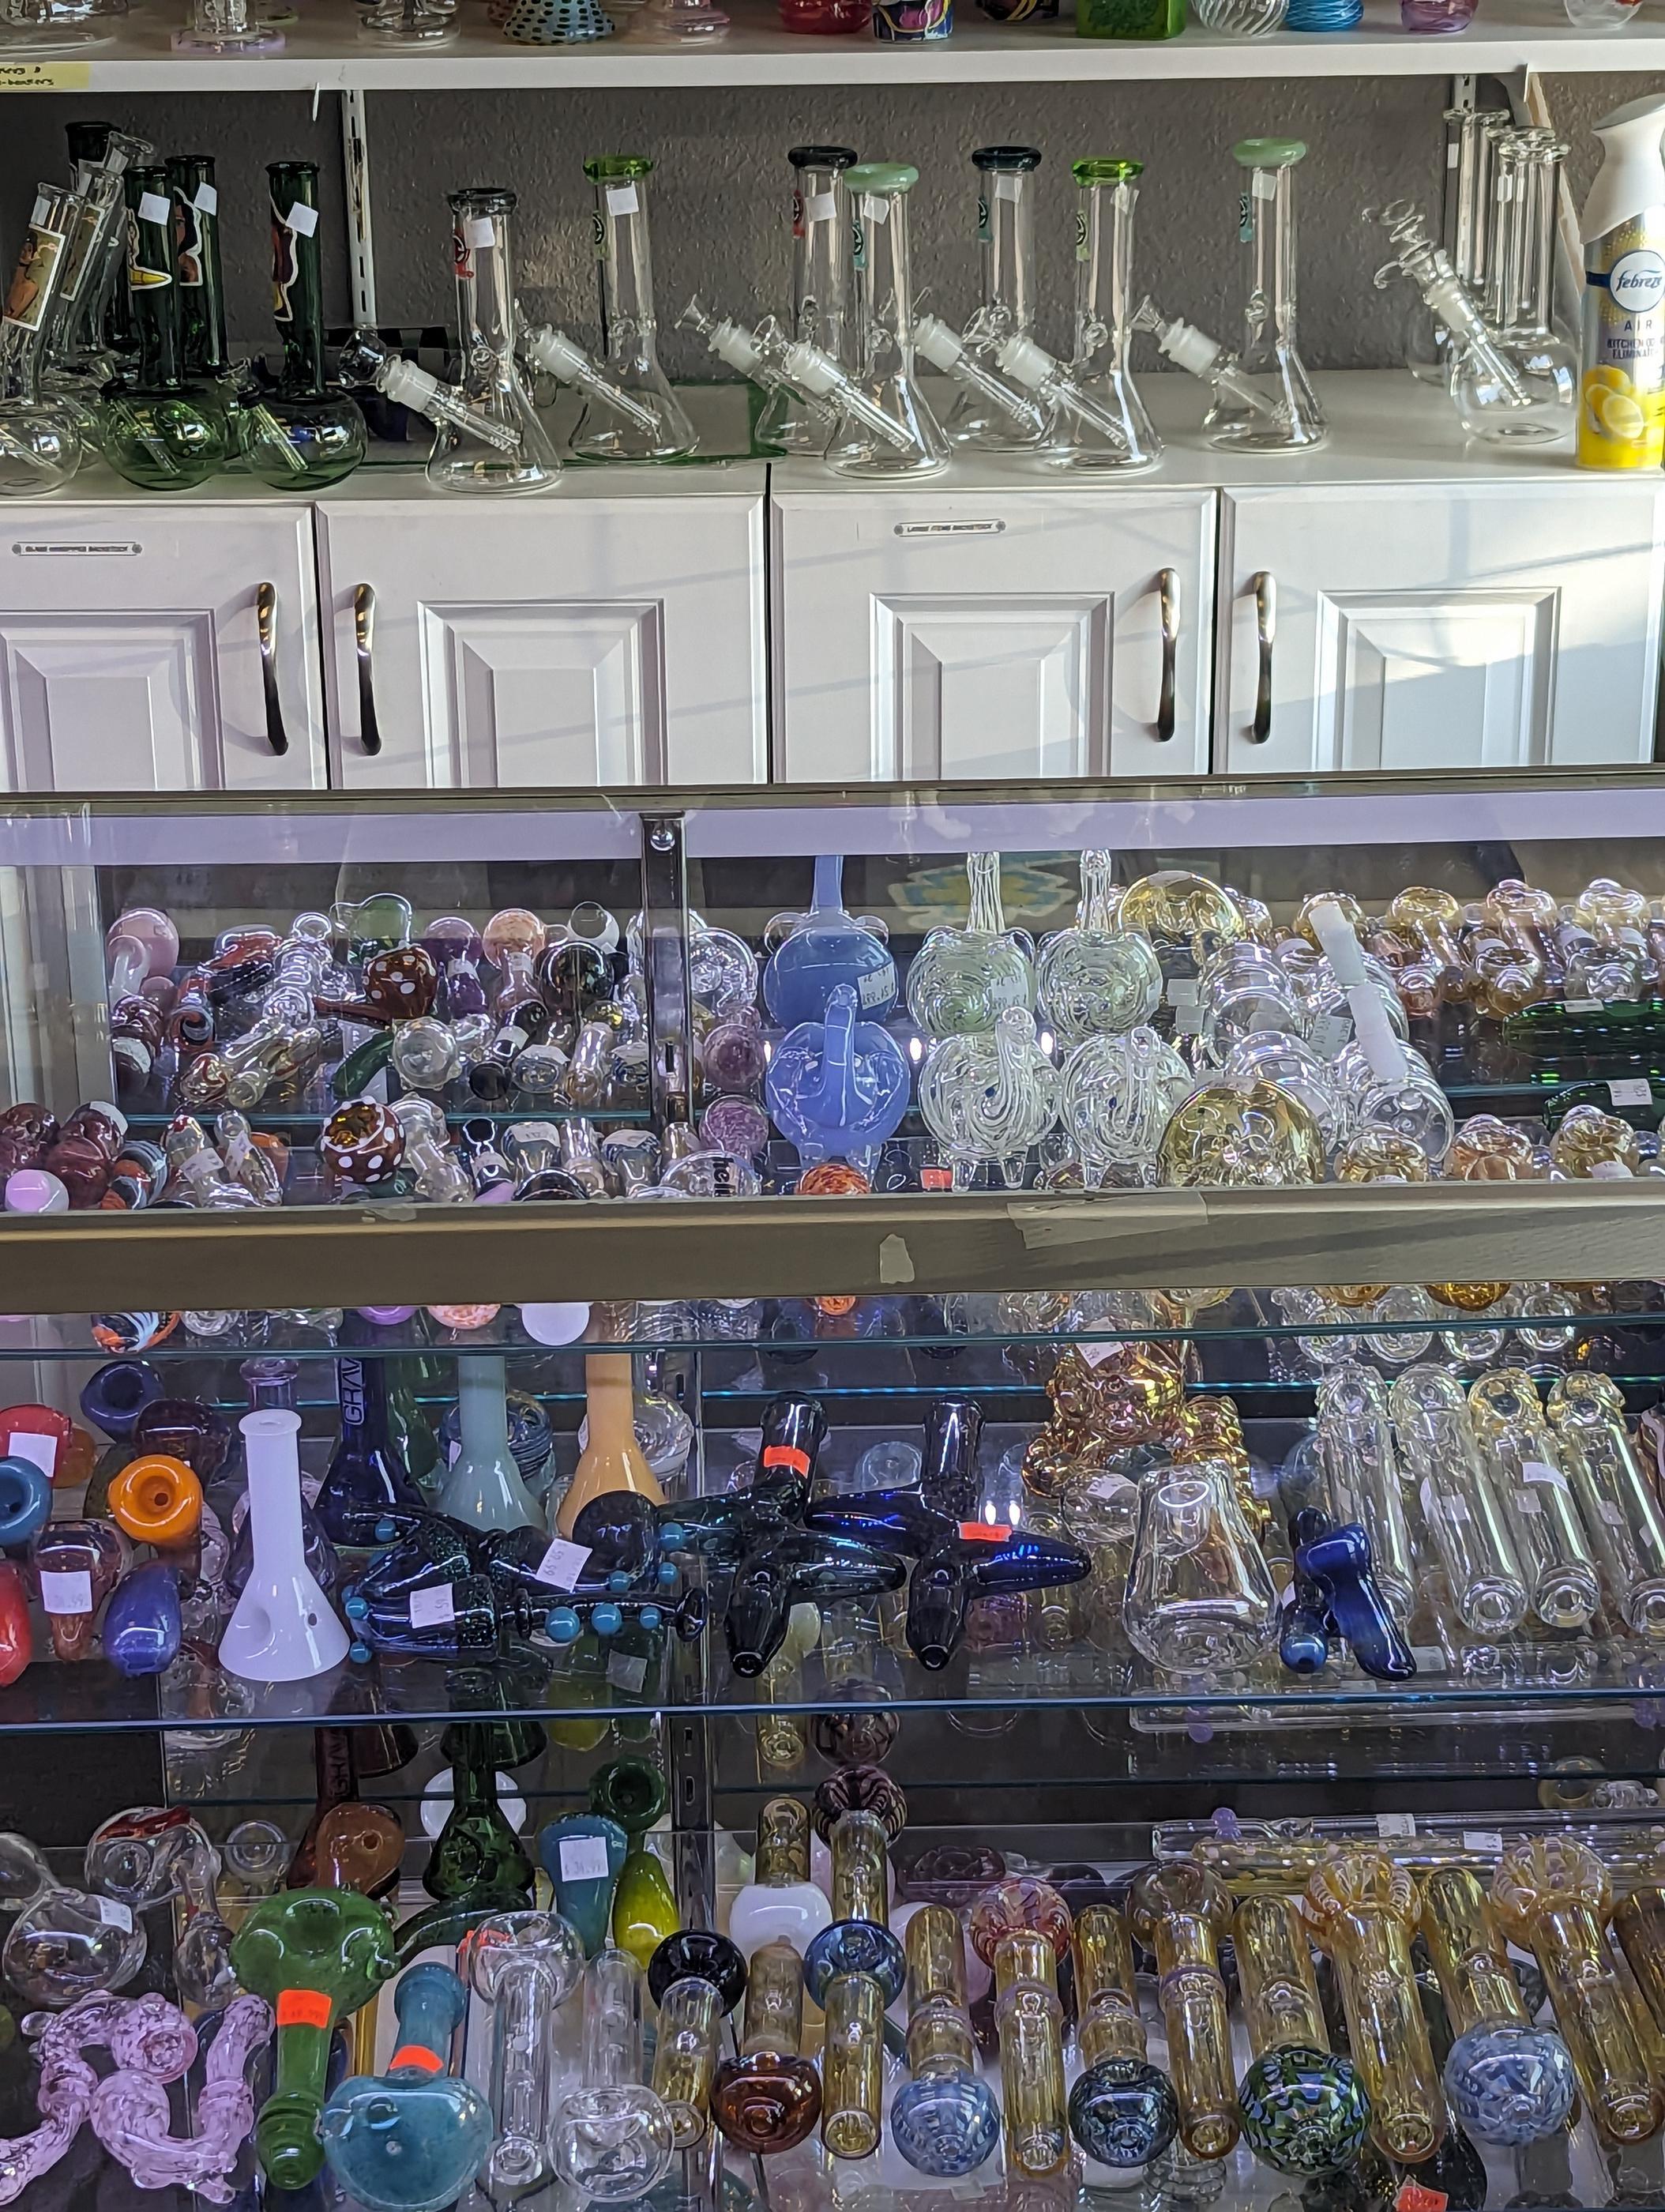 Glass bongs on display